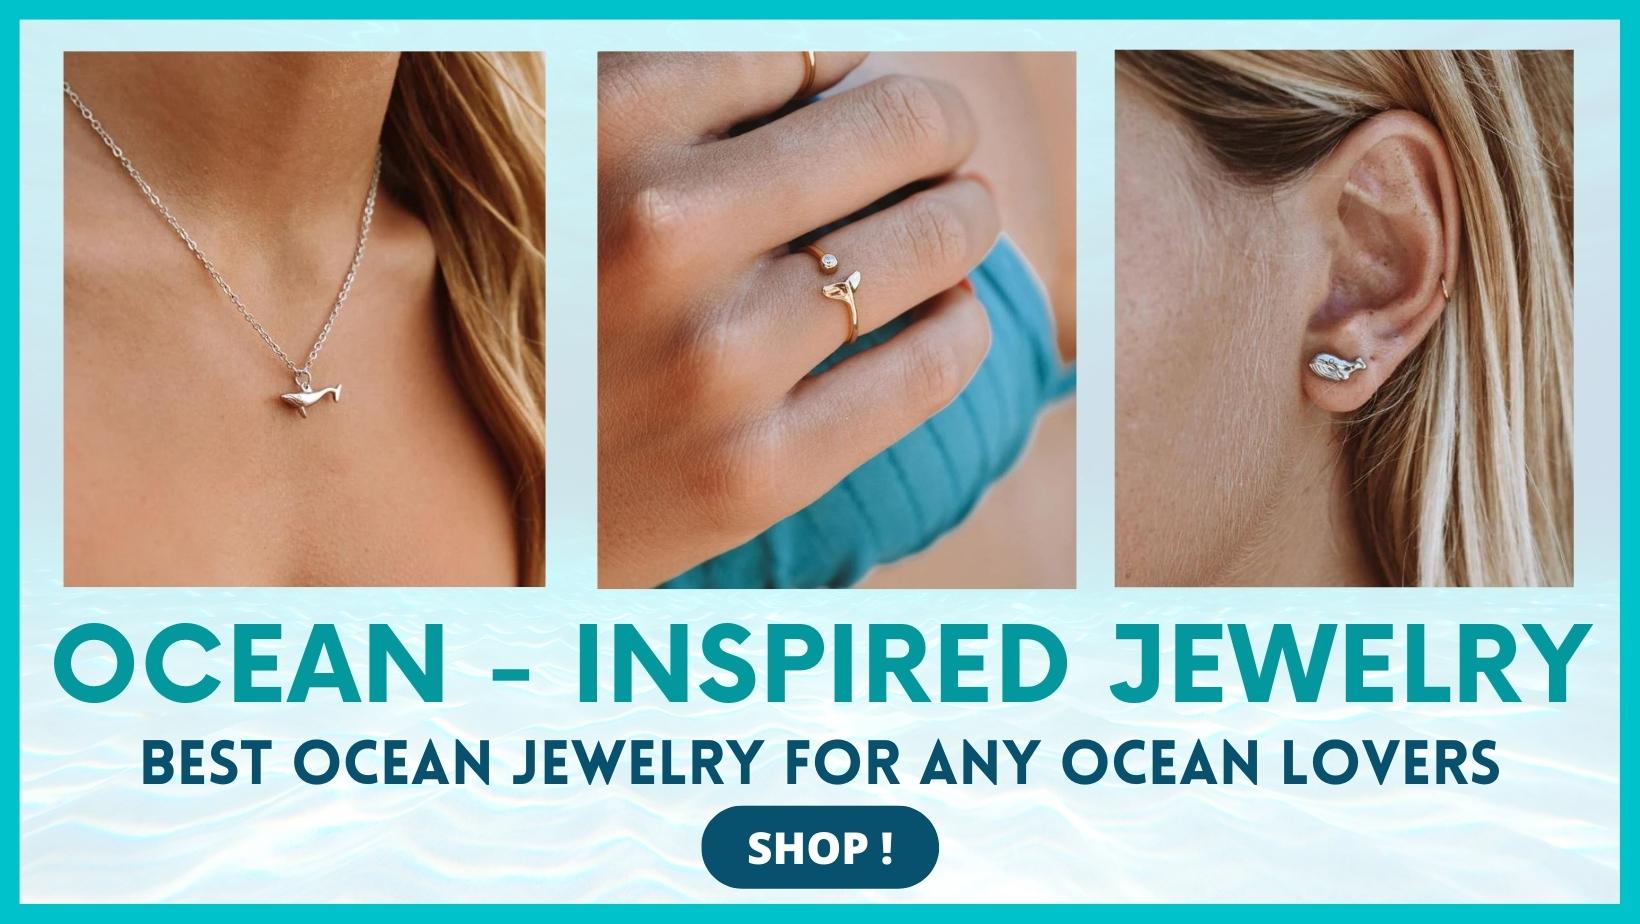 Ocean-inspired jewelry